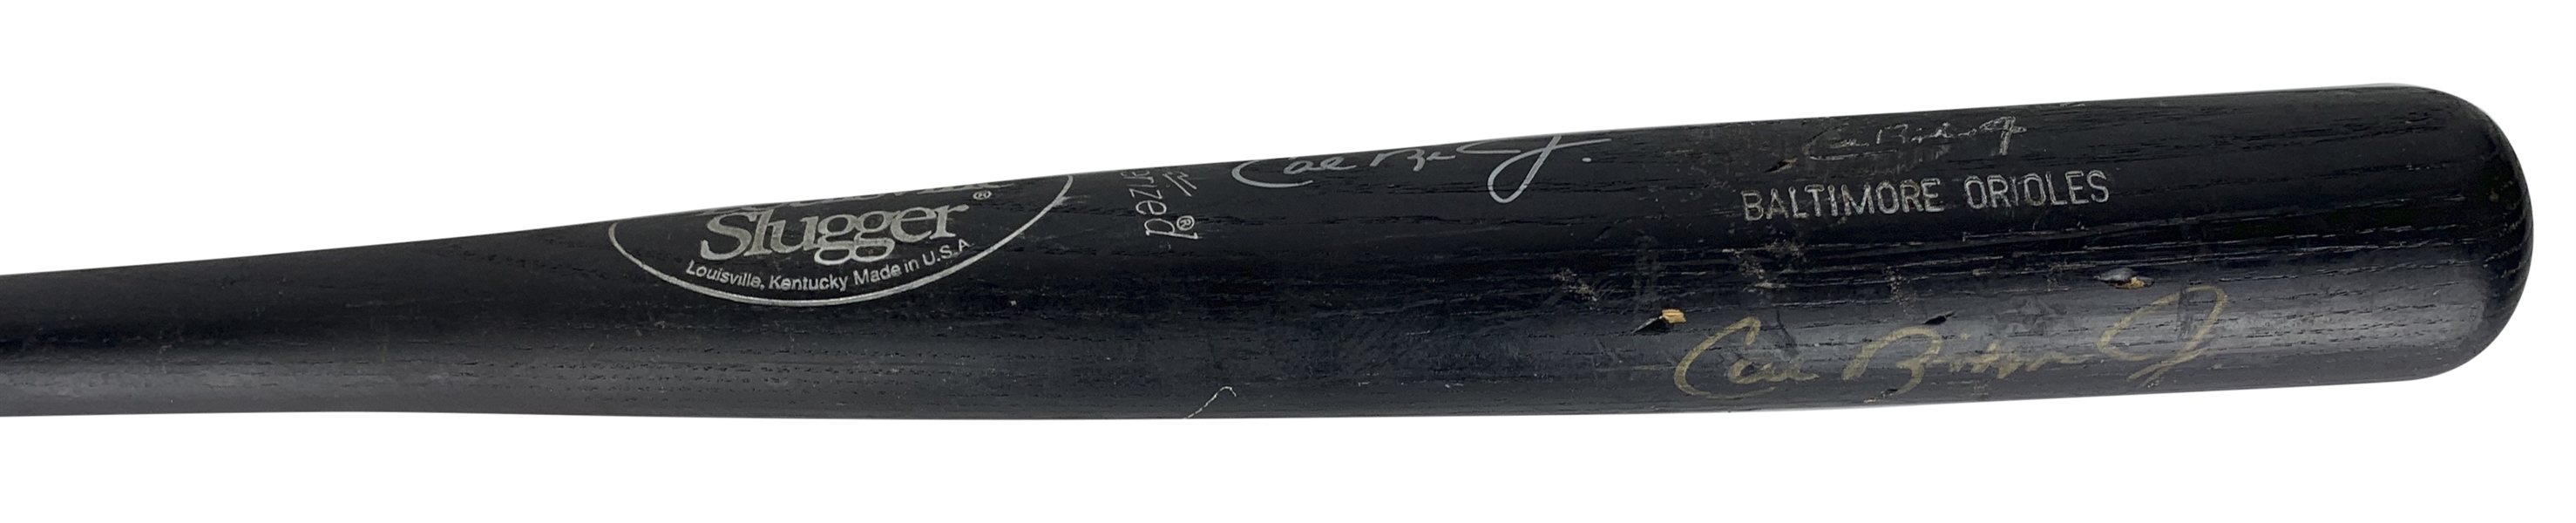 Cal Ripken Signed & Game Used 1991-97 P72 Baseball Bat (PSA/DNA GU 9.5!)